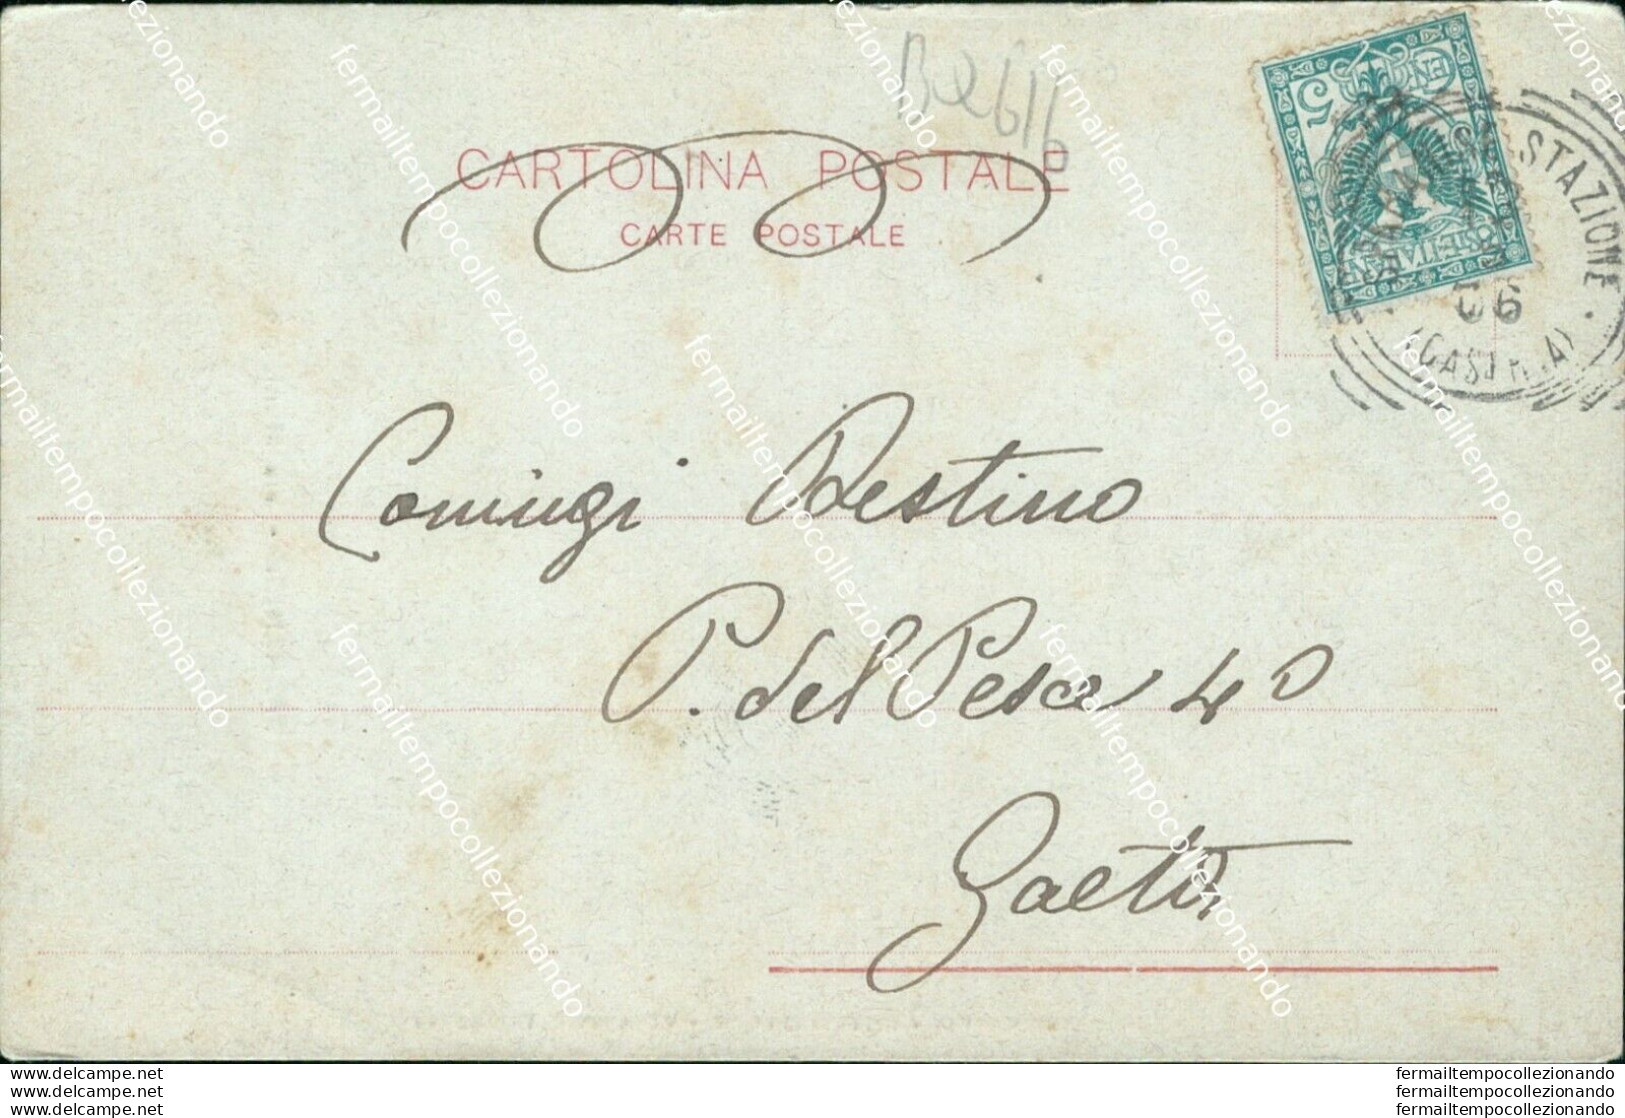 Bq616 Cartolina Sparanise Via Municipio Bella!1906 Provincia Di Caserta Campania - Caserta